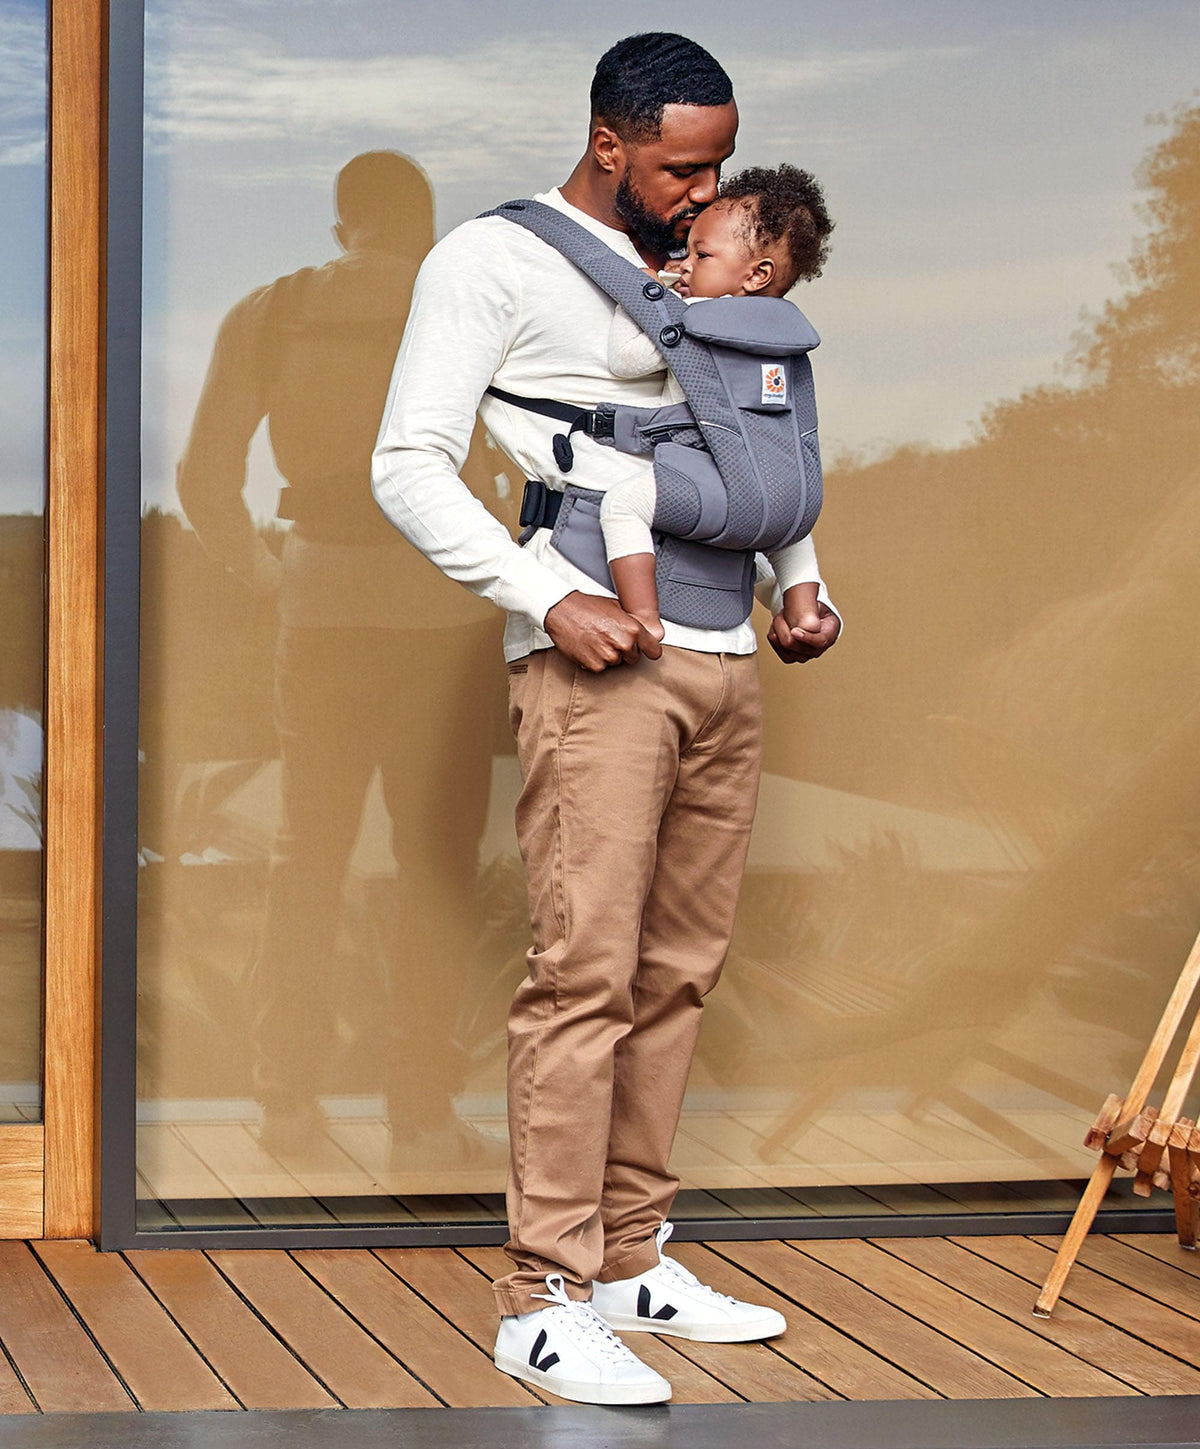 Ergobaby Omni Breeze Baby Carrier - Graphite Grey – Mamas & Papas UK